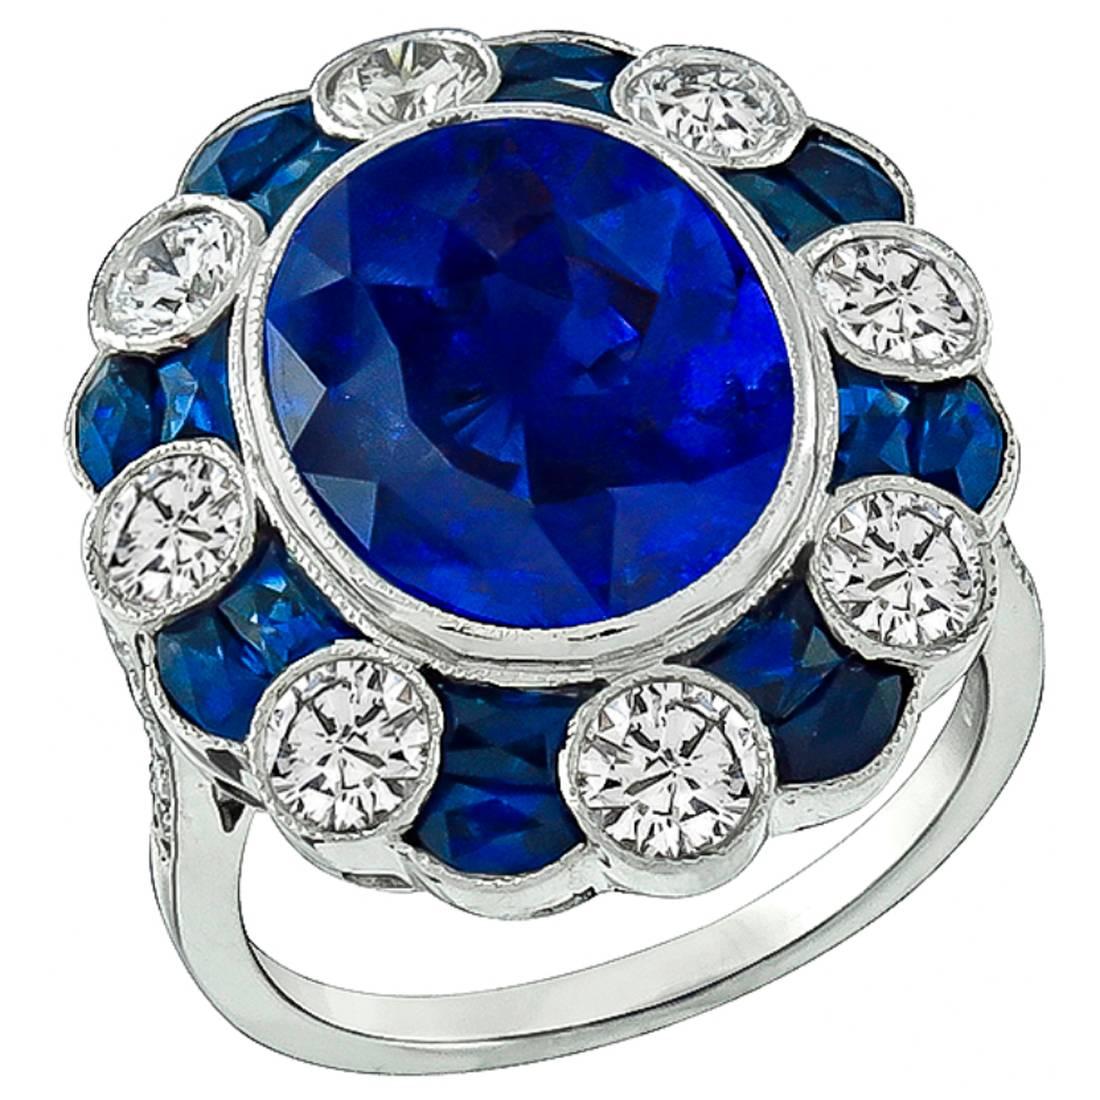 Stunning 6 Carat Oval Cut Sapphire Diamond Gold Ring